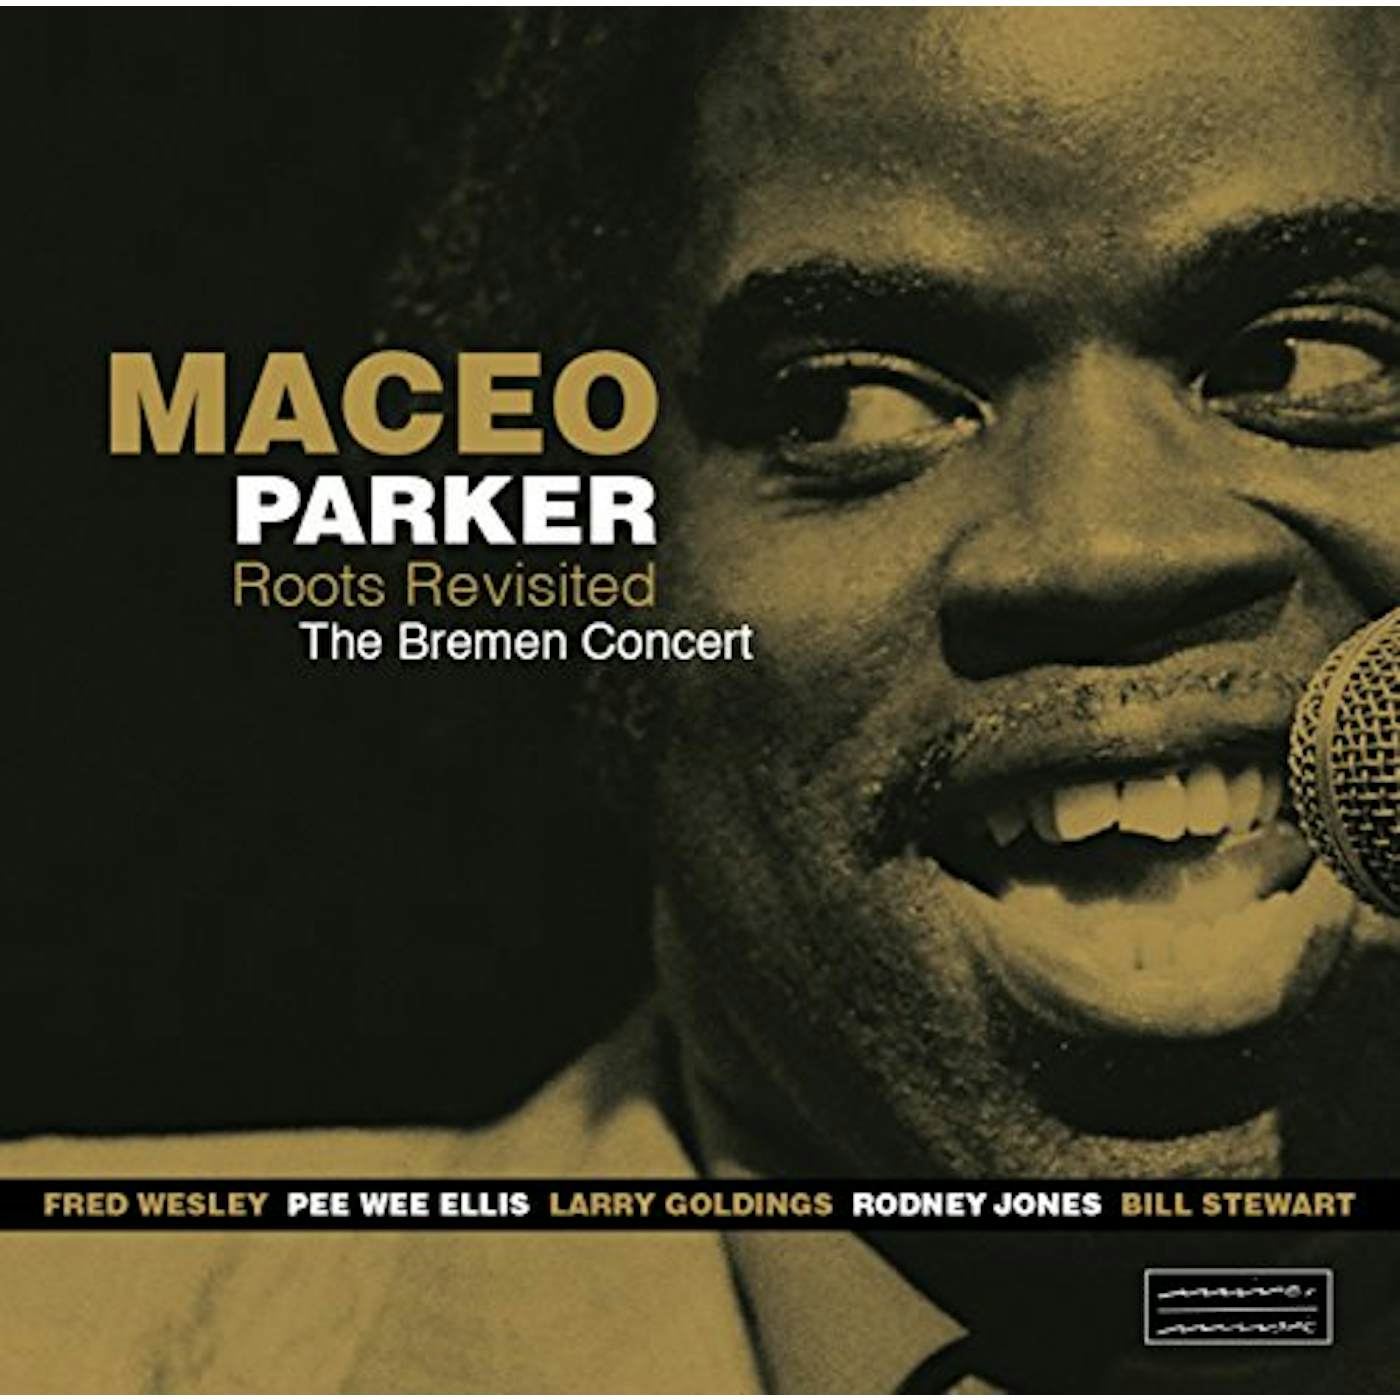 Maceo Parker Roots Revisited The Bremen Concert Vinyl Record